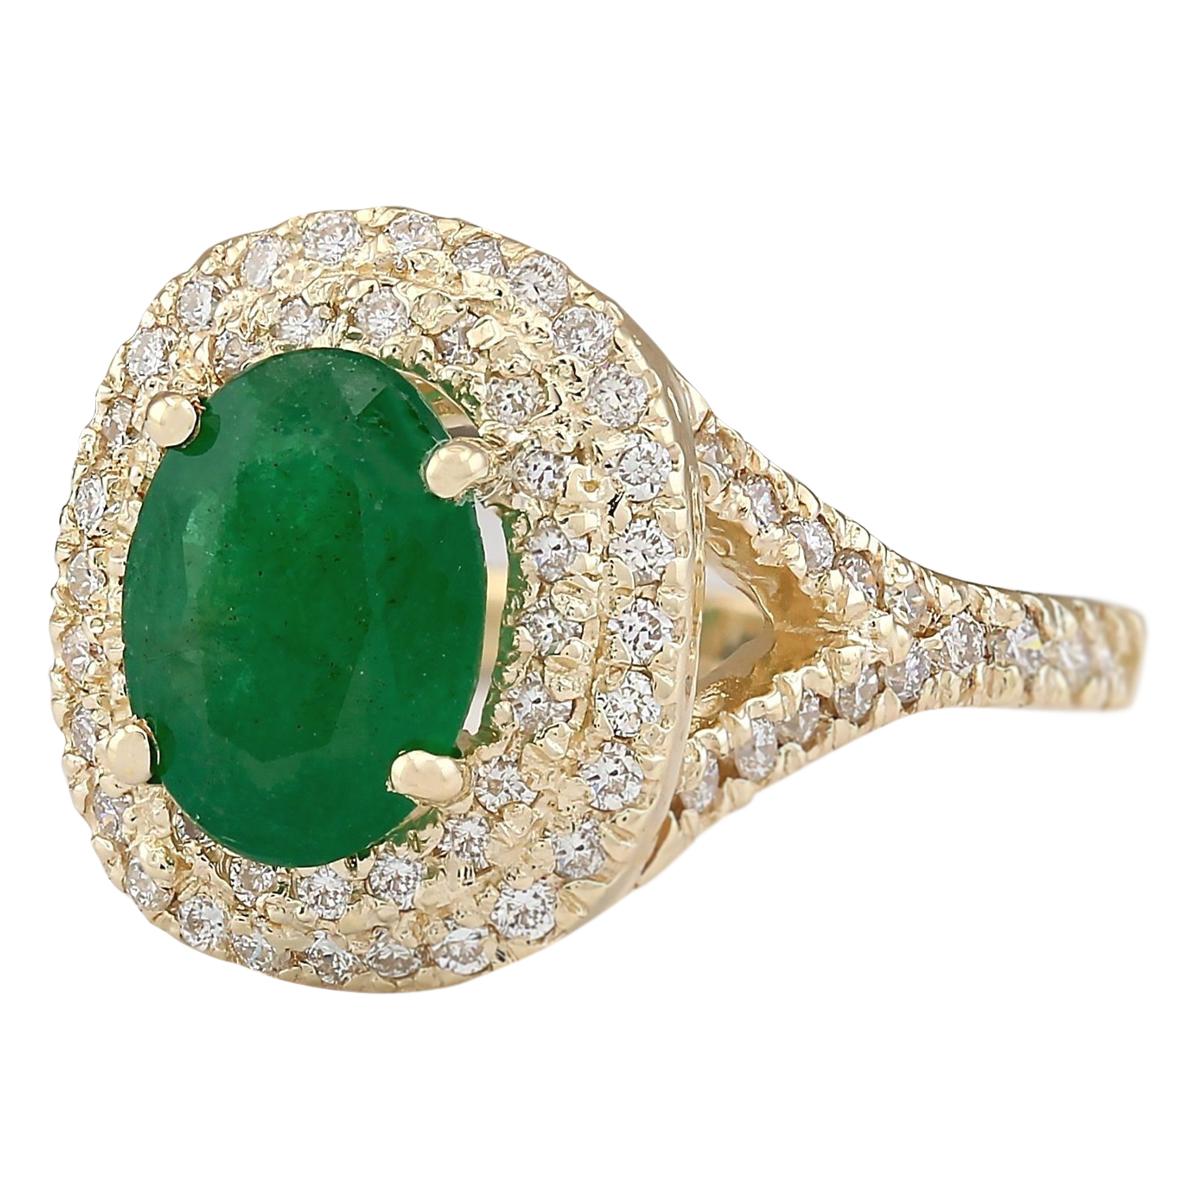 3.05 Carat Natural Emerald 14 Karat Yellow Gold Diamond Ring
Stamped: 14K Yellow Gold
Total Ring Weight: 6.2 Grams
Total Natural Emerald Weight is 2.15 Carat (Measures: 9.00x7.00 mm)
Color: Green
Total Natural Diamond Weight is 0.90 Carat
Color: